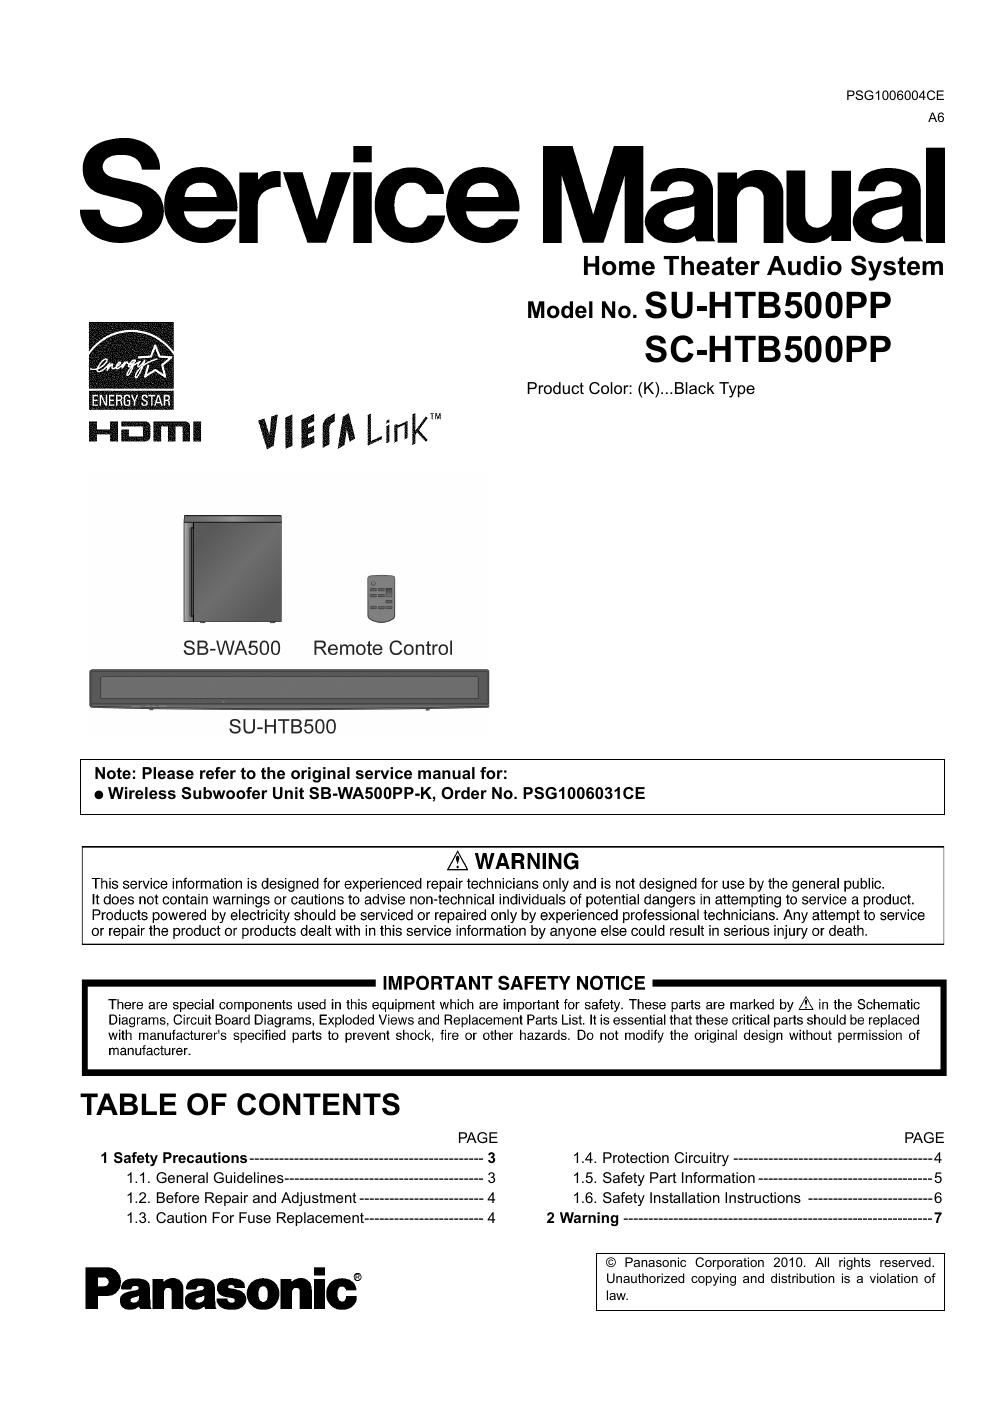 panasonic sc htb 500 pp service manual